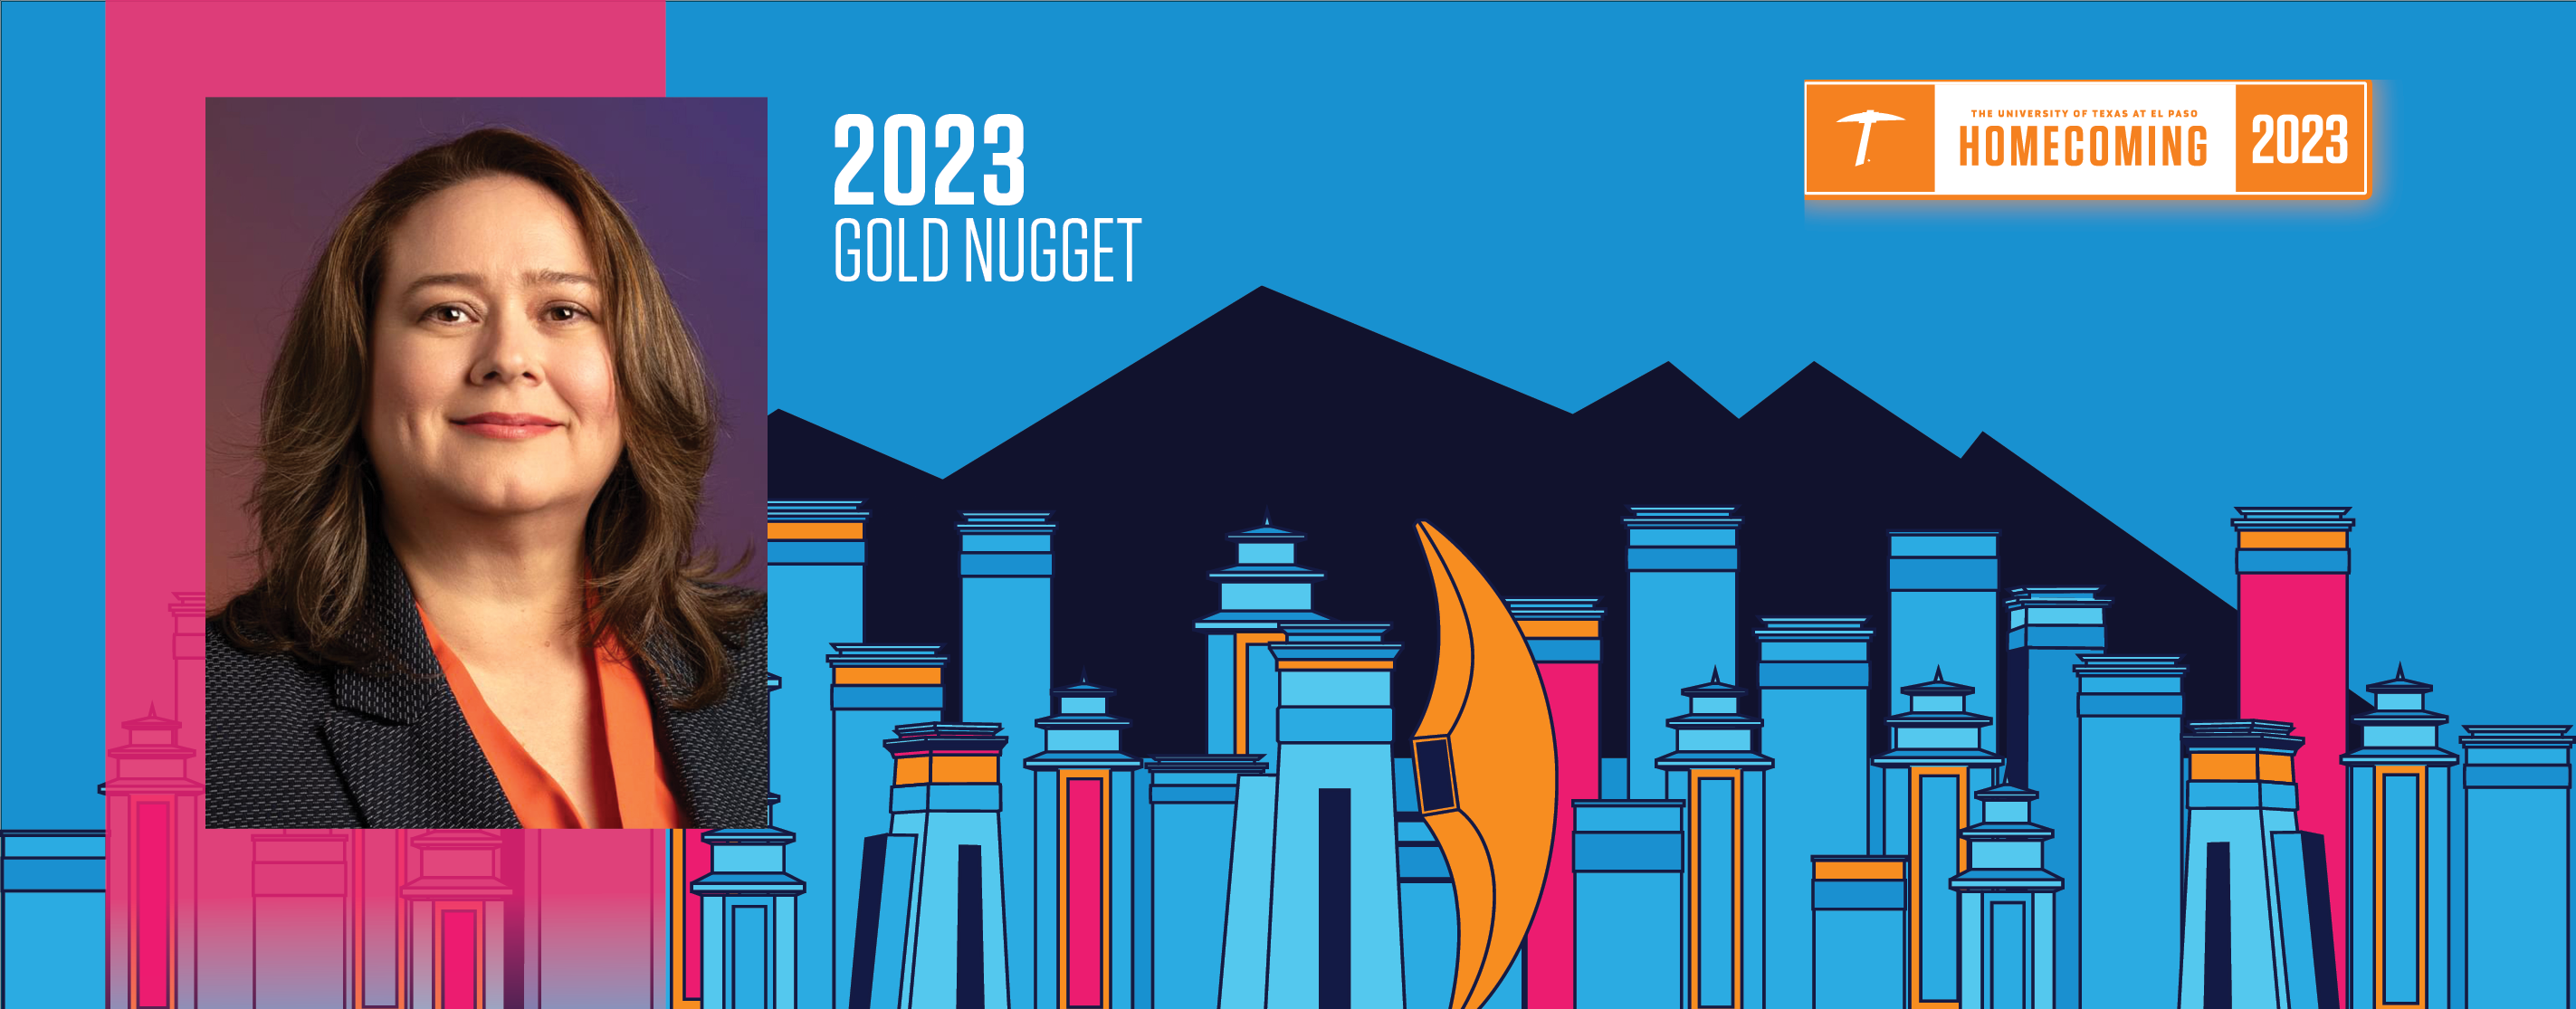 2023 Gold Nugget Irazema Solis Rojas 